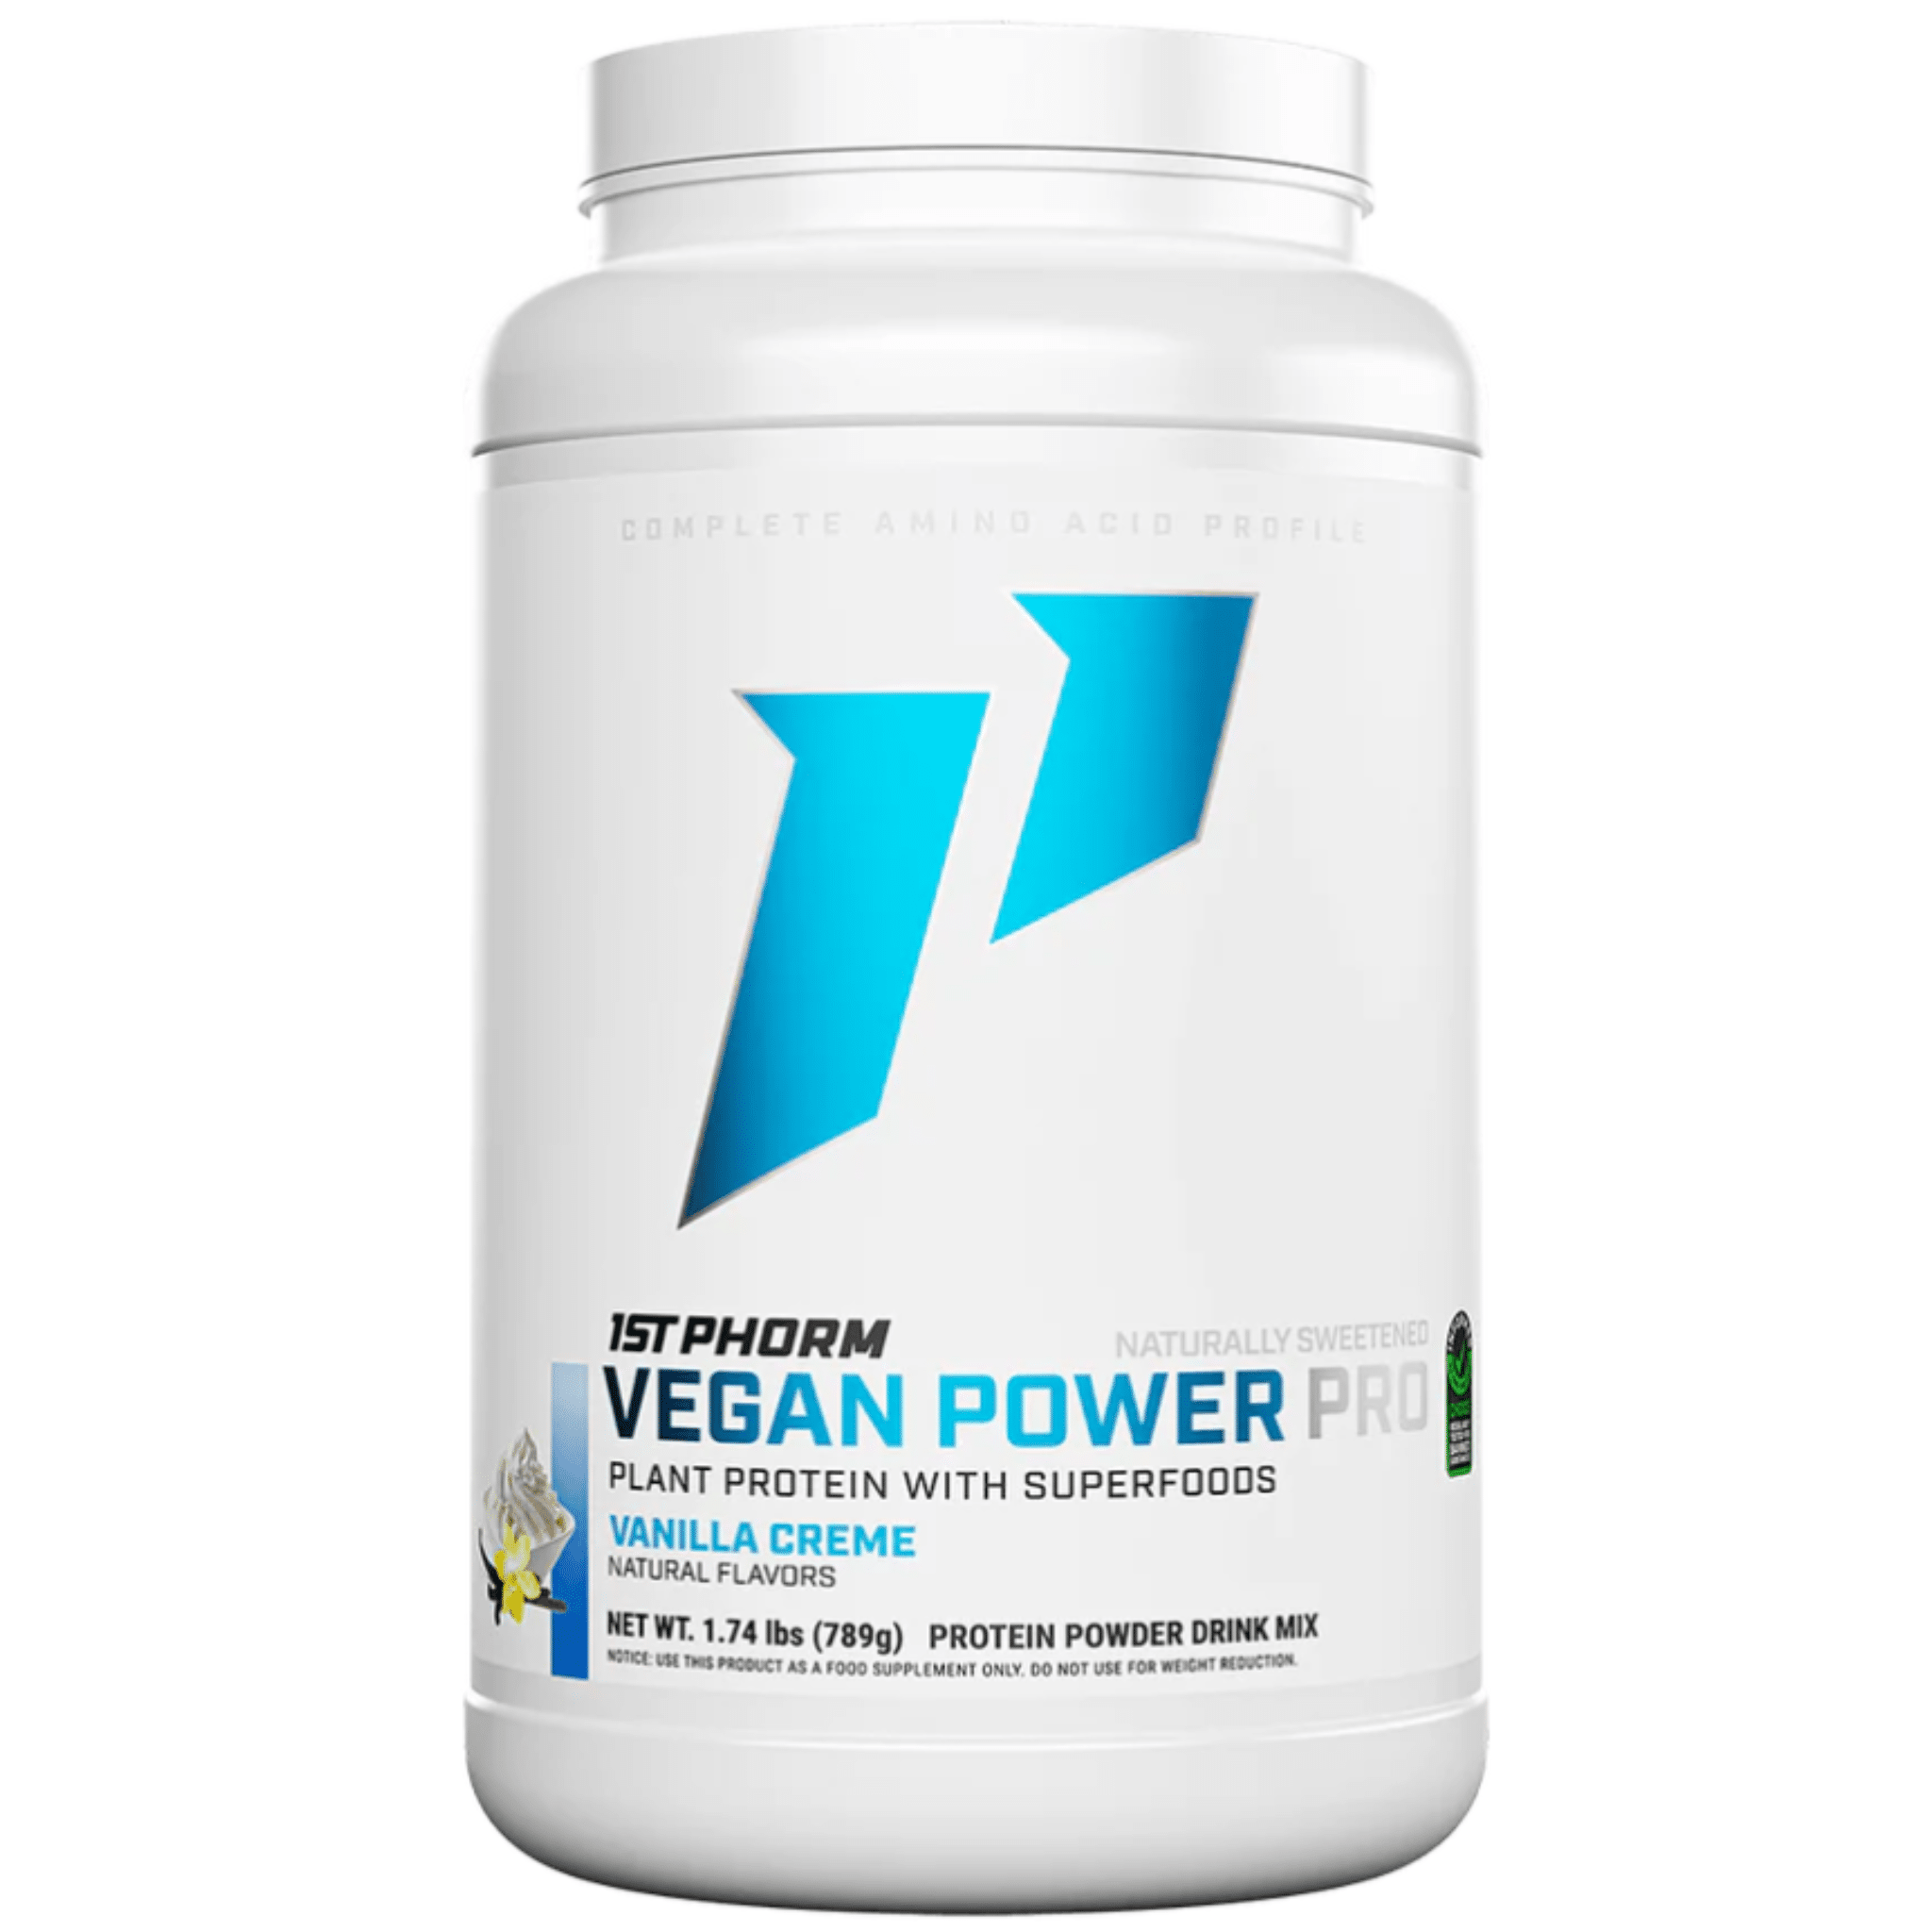 1st Phorm Vegan Power Pro